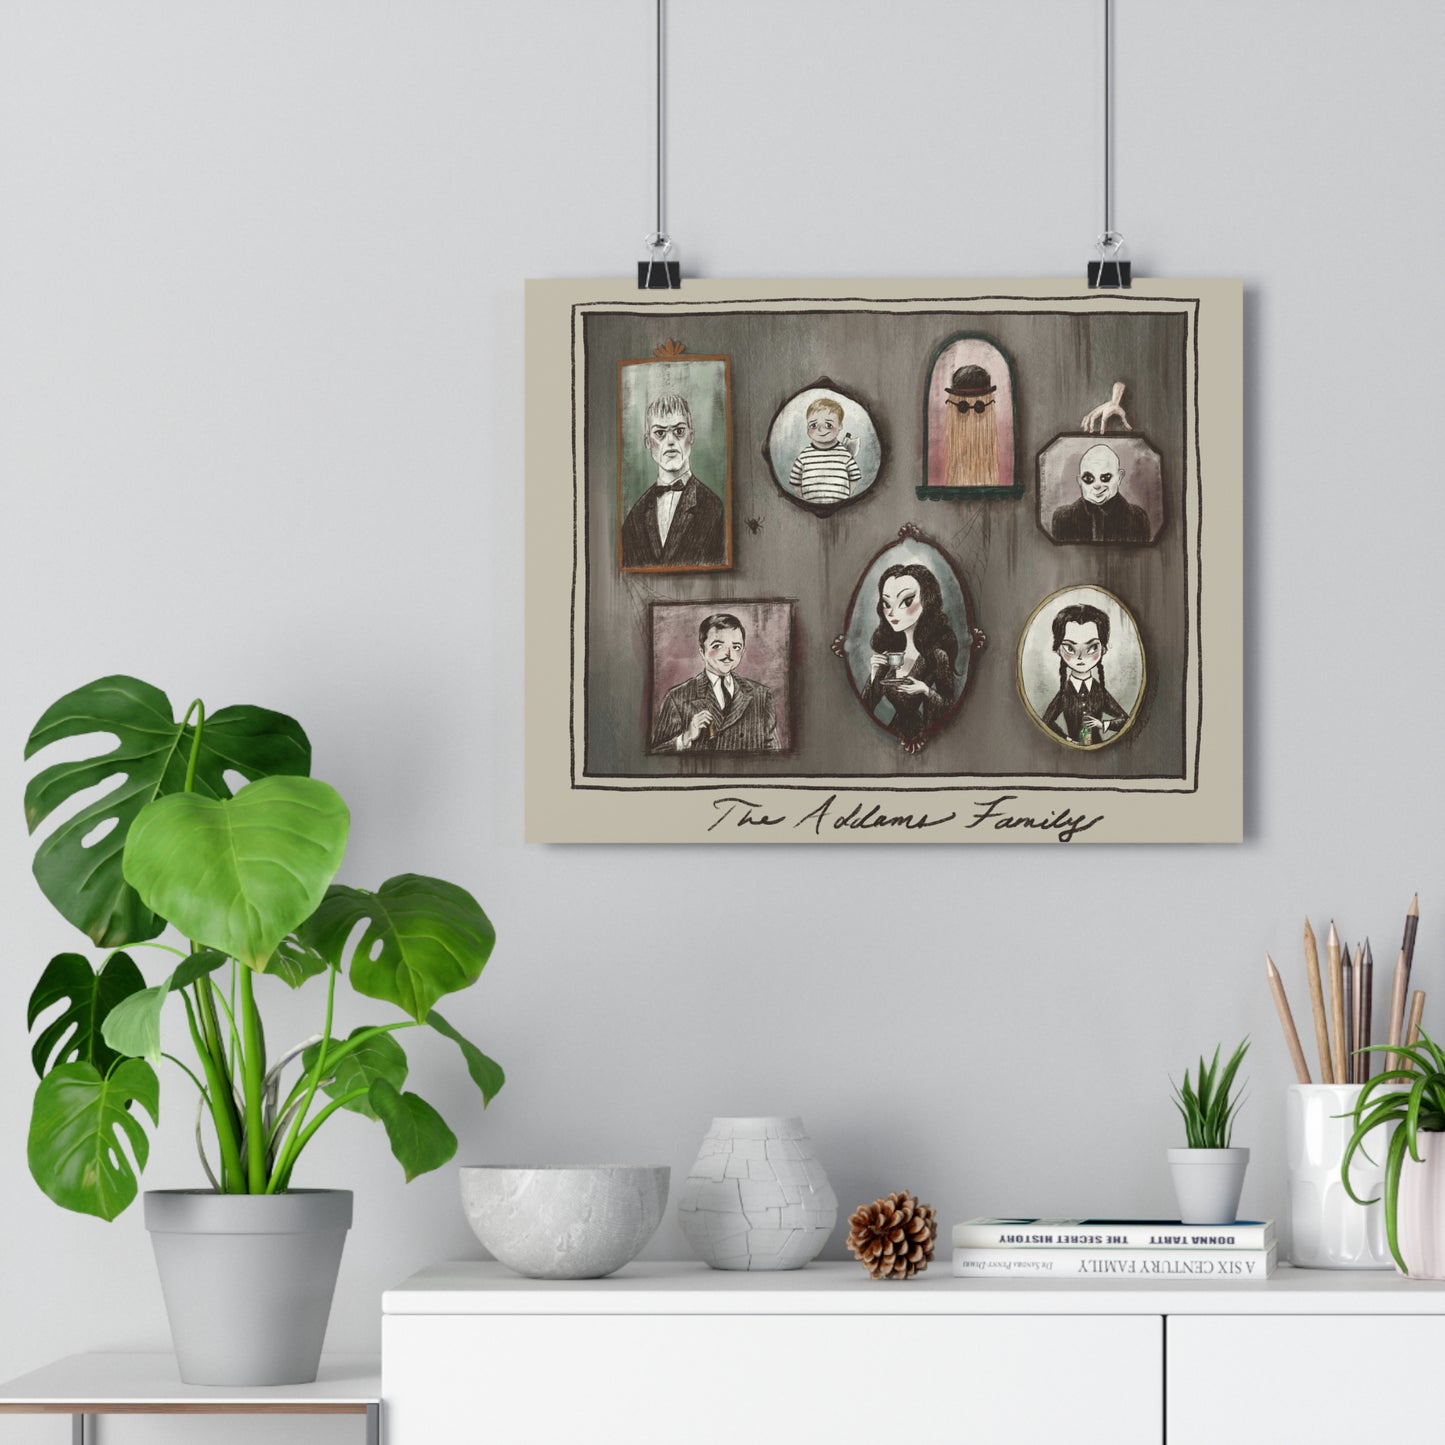 The Addams Family Giclée Art Print